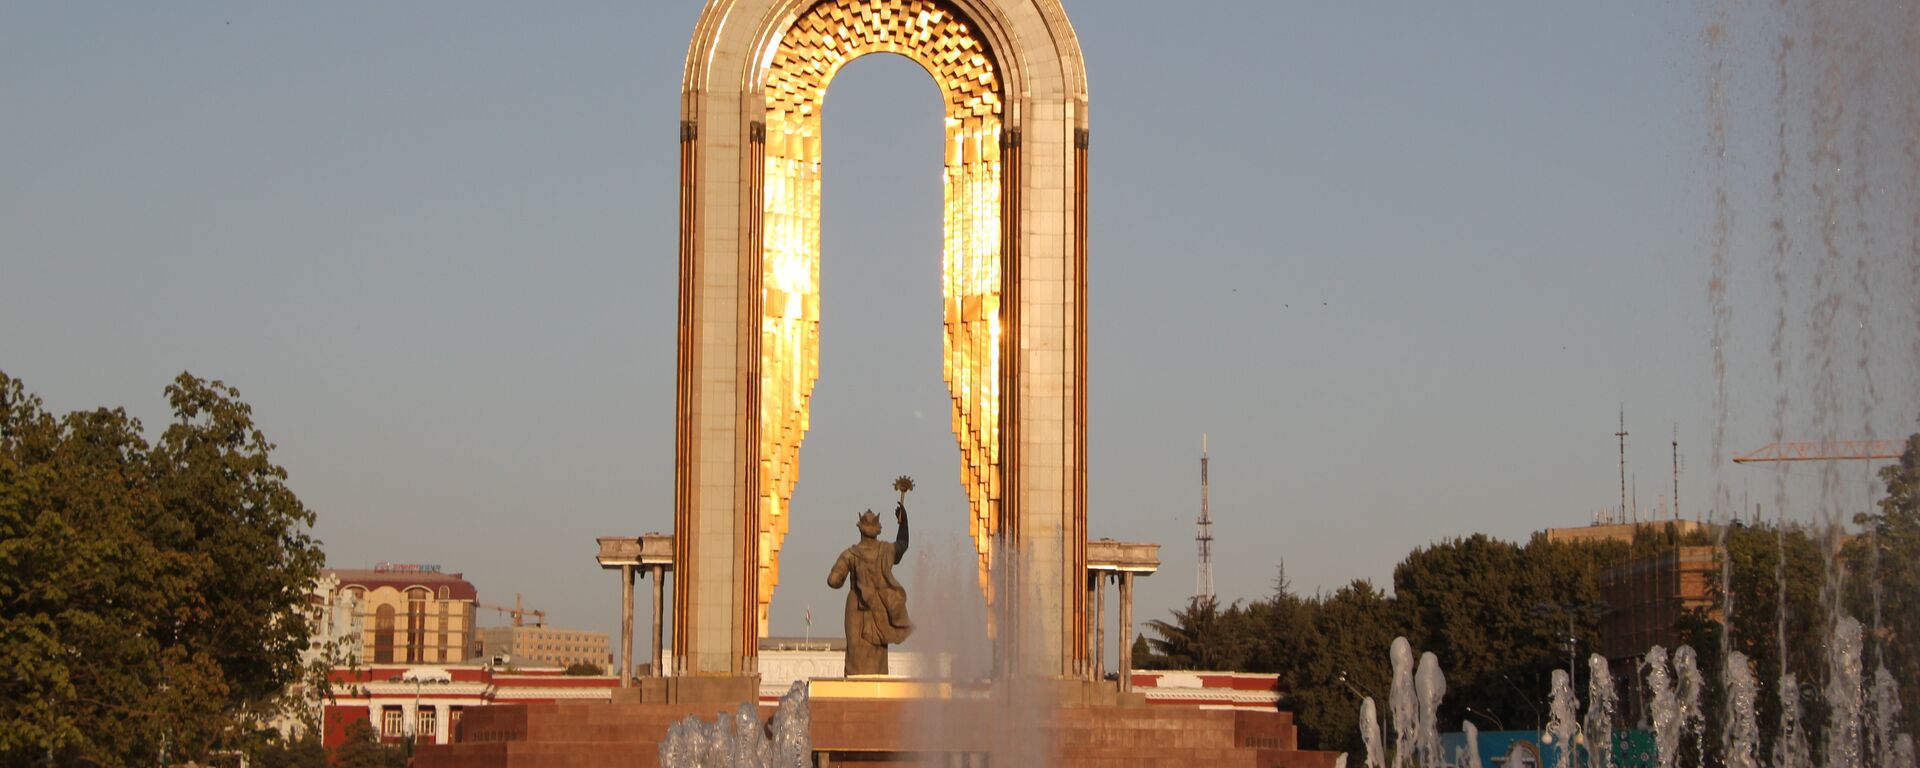 Монумент Исмаила Самани, Душанбе - Sputnik Тоҷикистон, 1920, 23.01.2018